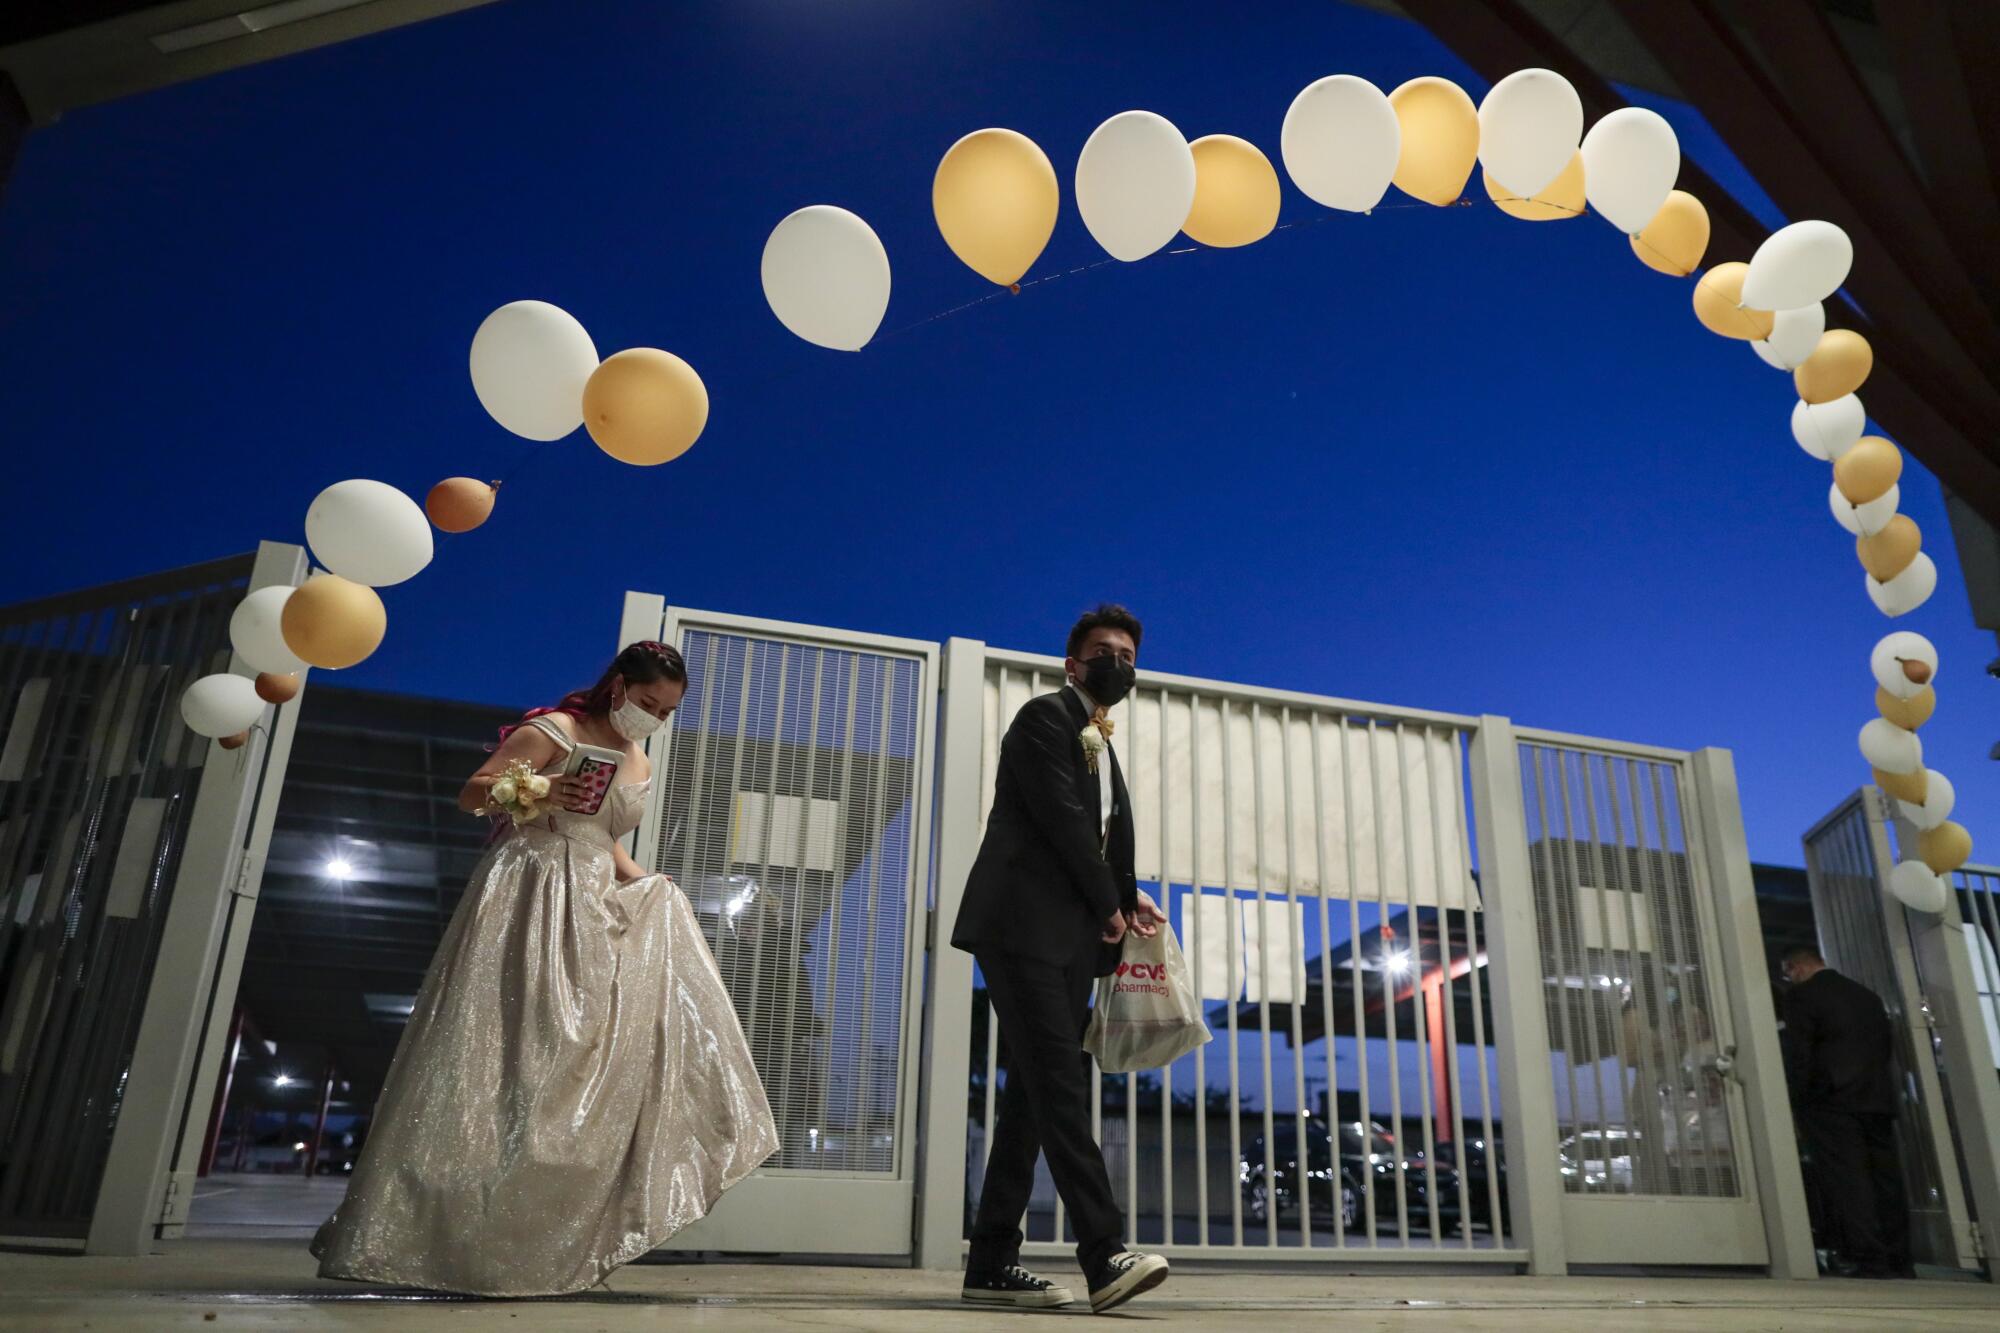 Jade Magallanes and her boyfriend, Jose Gonzalez, arrive at Sierra Vista for prom.